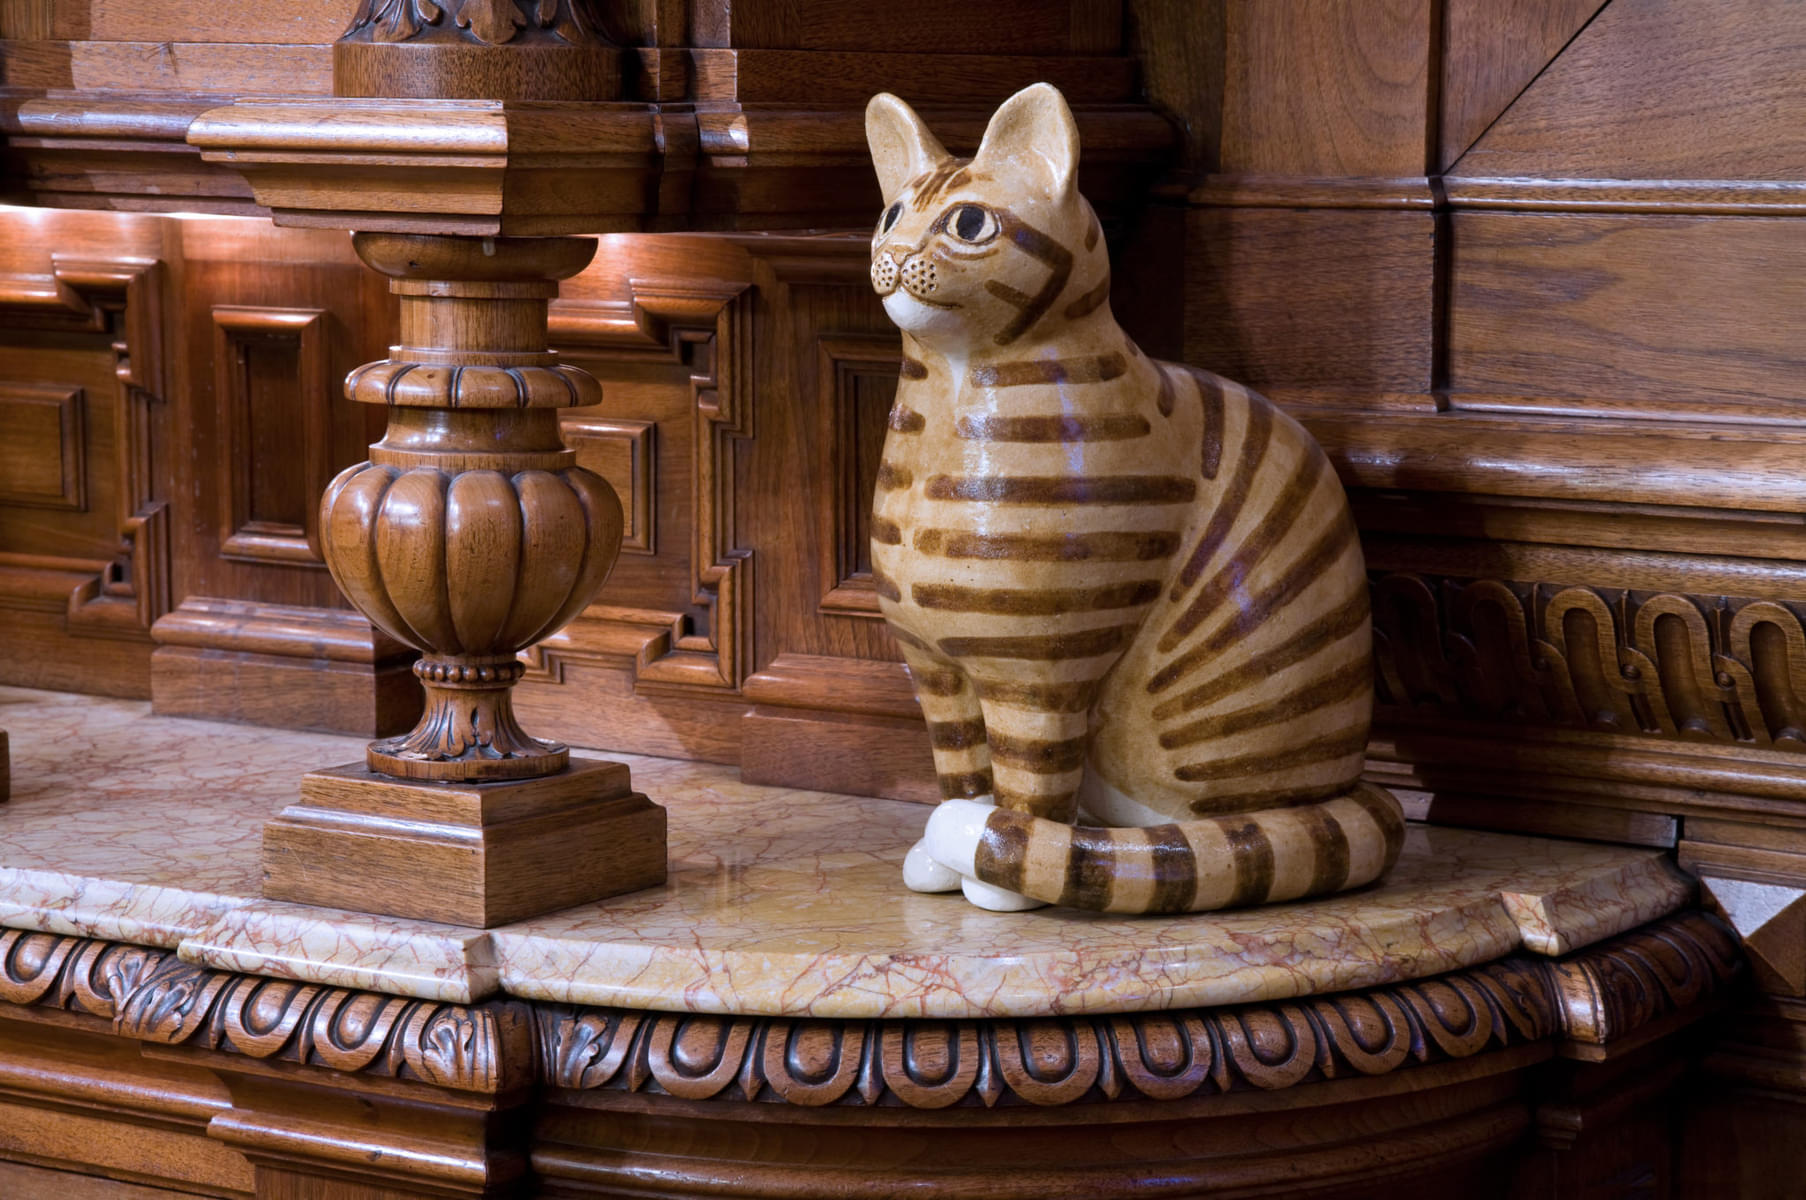 Admire the creative sculpture of a cat